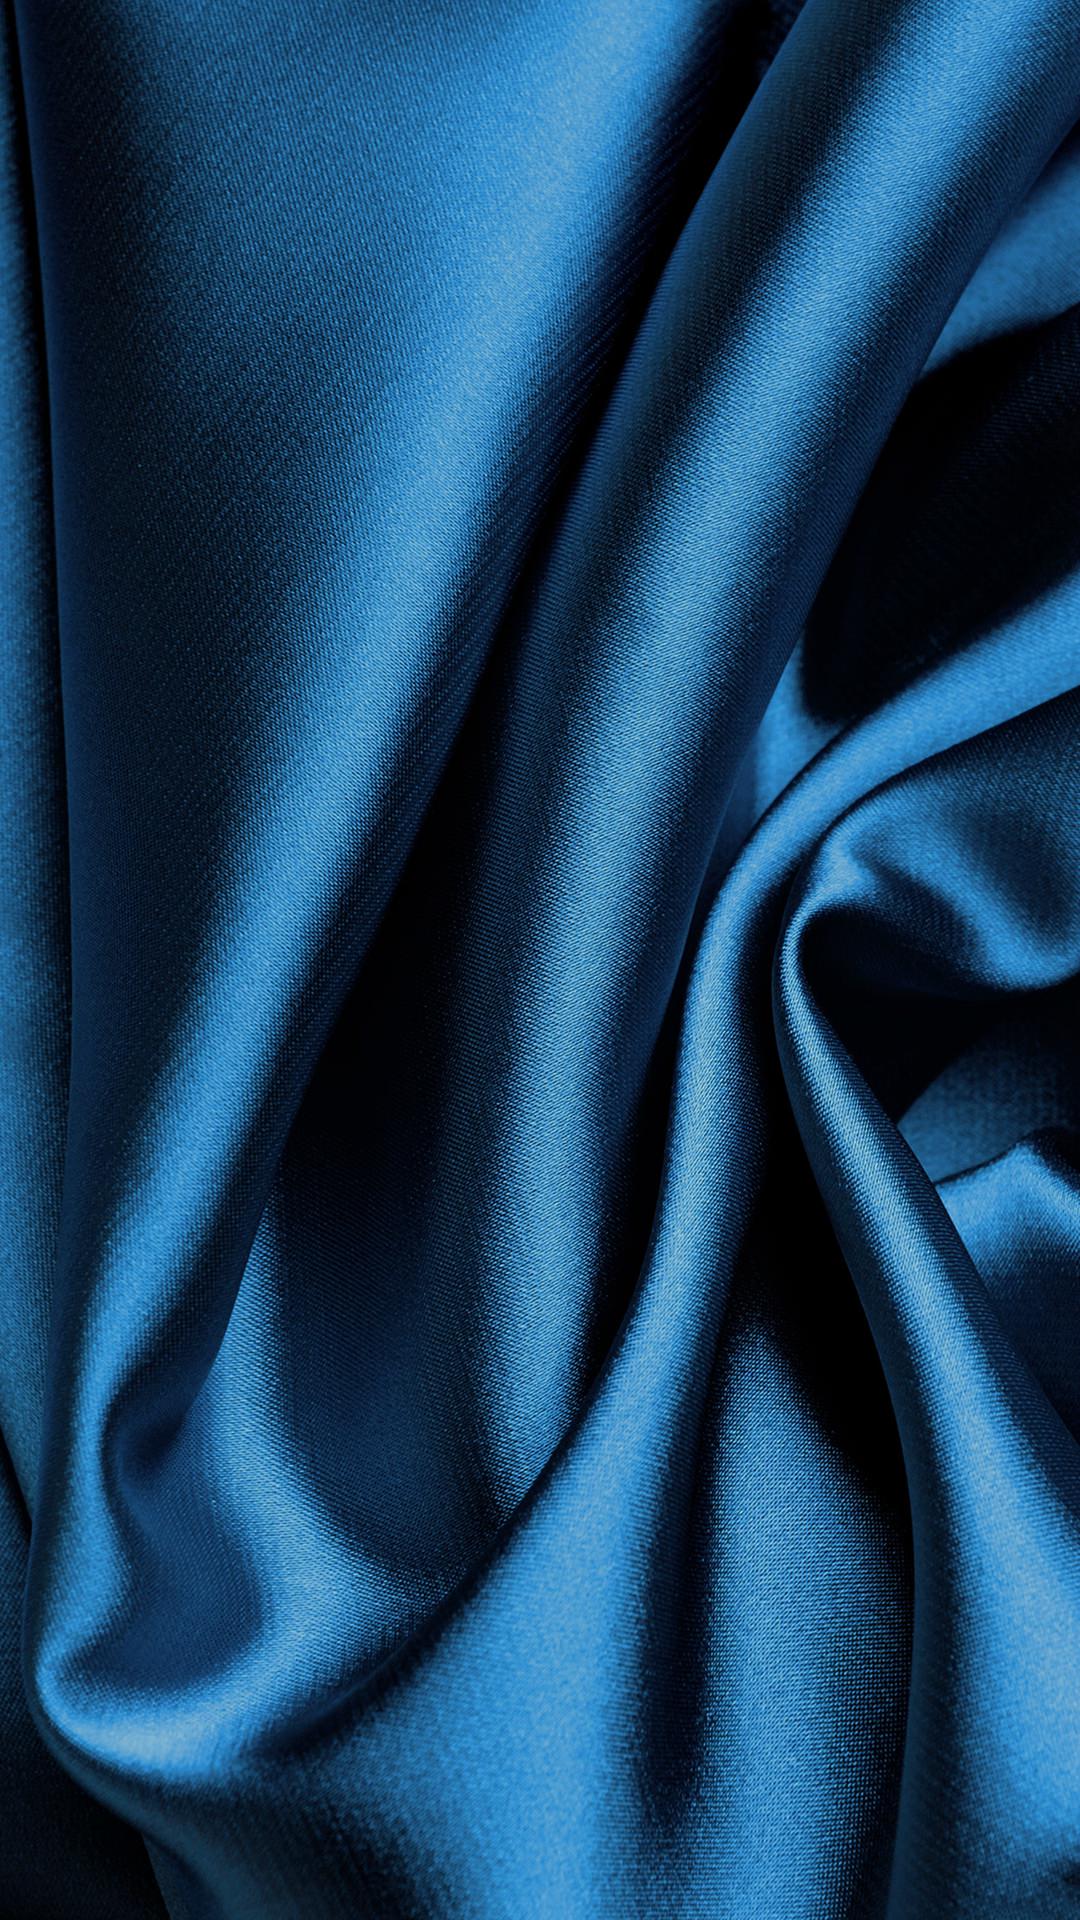 Download 26+ Silk Textures, Backgrounds, Patterns | Design Trends ...